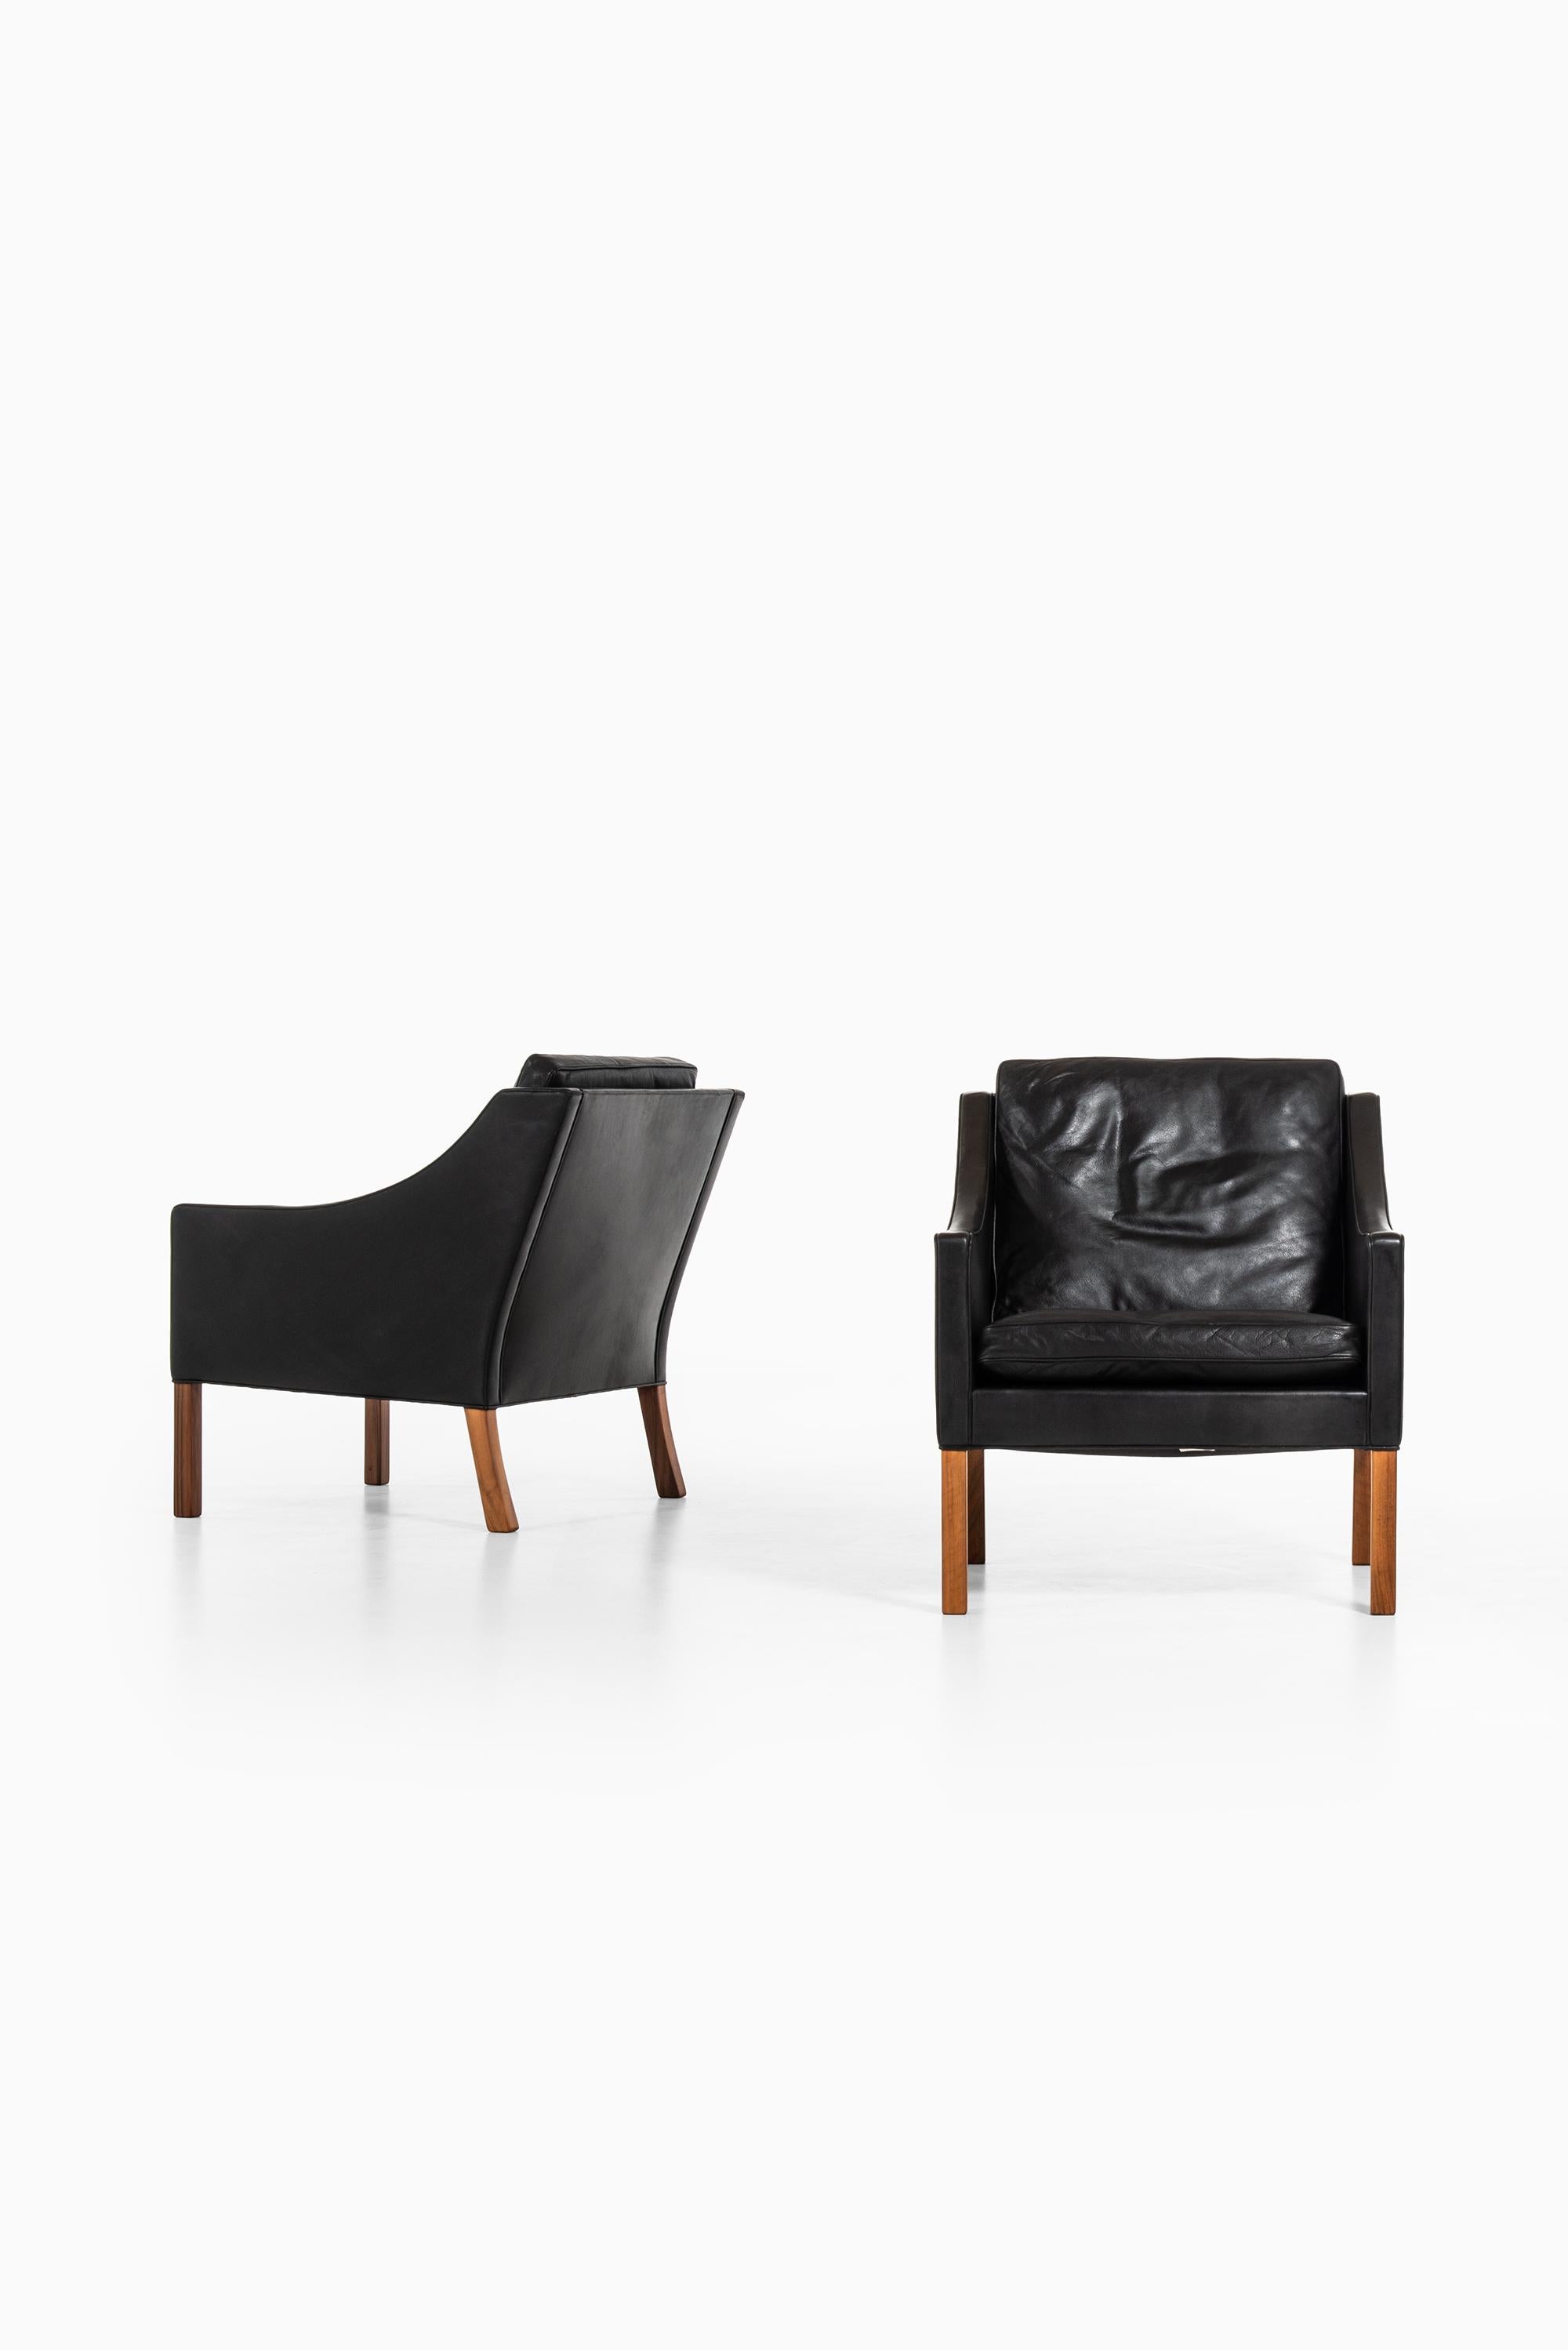 Børge Mogensen Easy Chairs Model 2207 by Fredericia Stolefabrik in Denmark For Sale 1